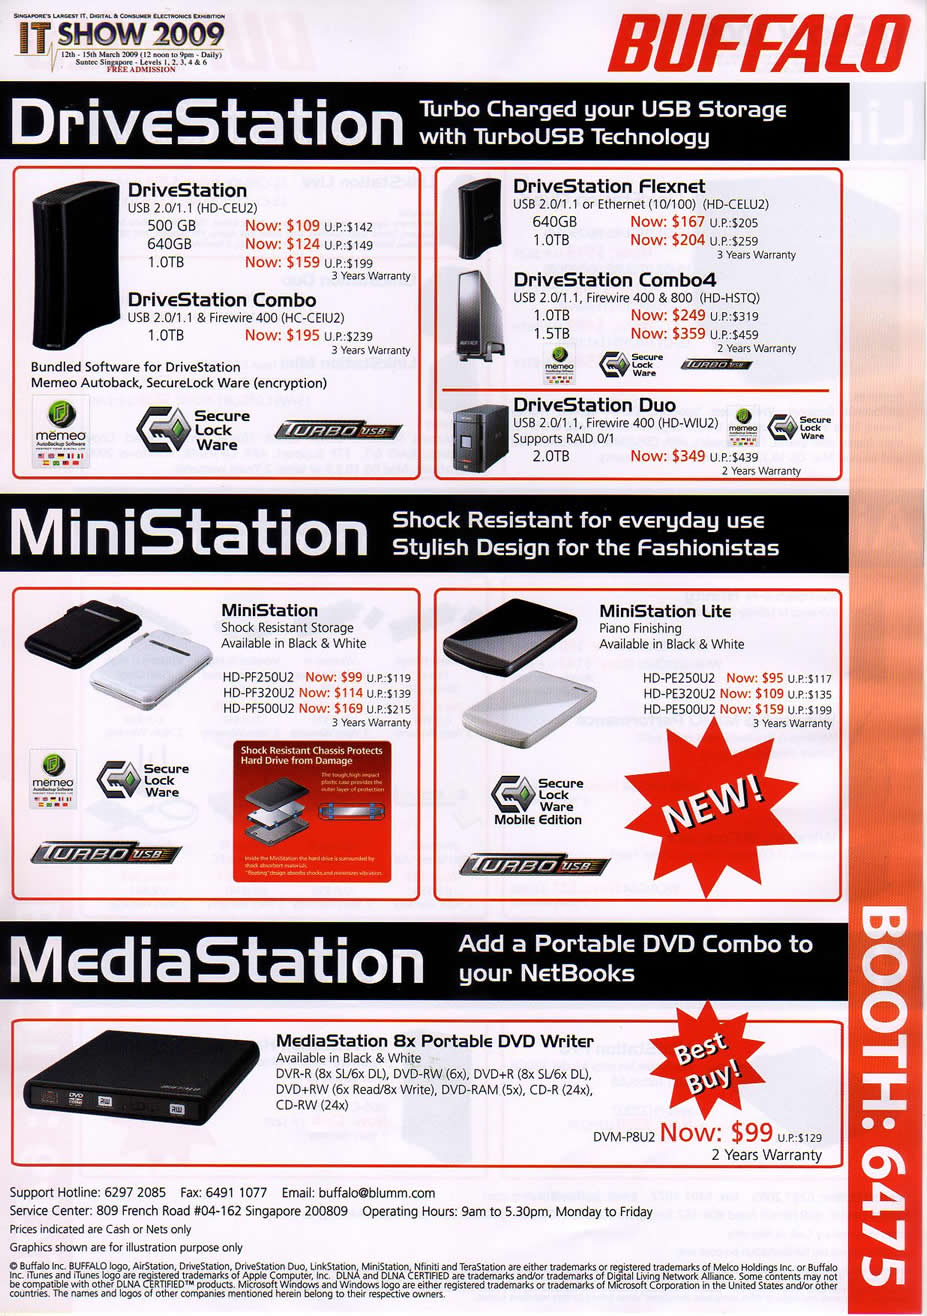 IT Show 2009 price list image brochure of Buffalo Station 1 (coldfreeze)